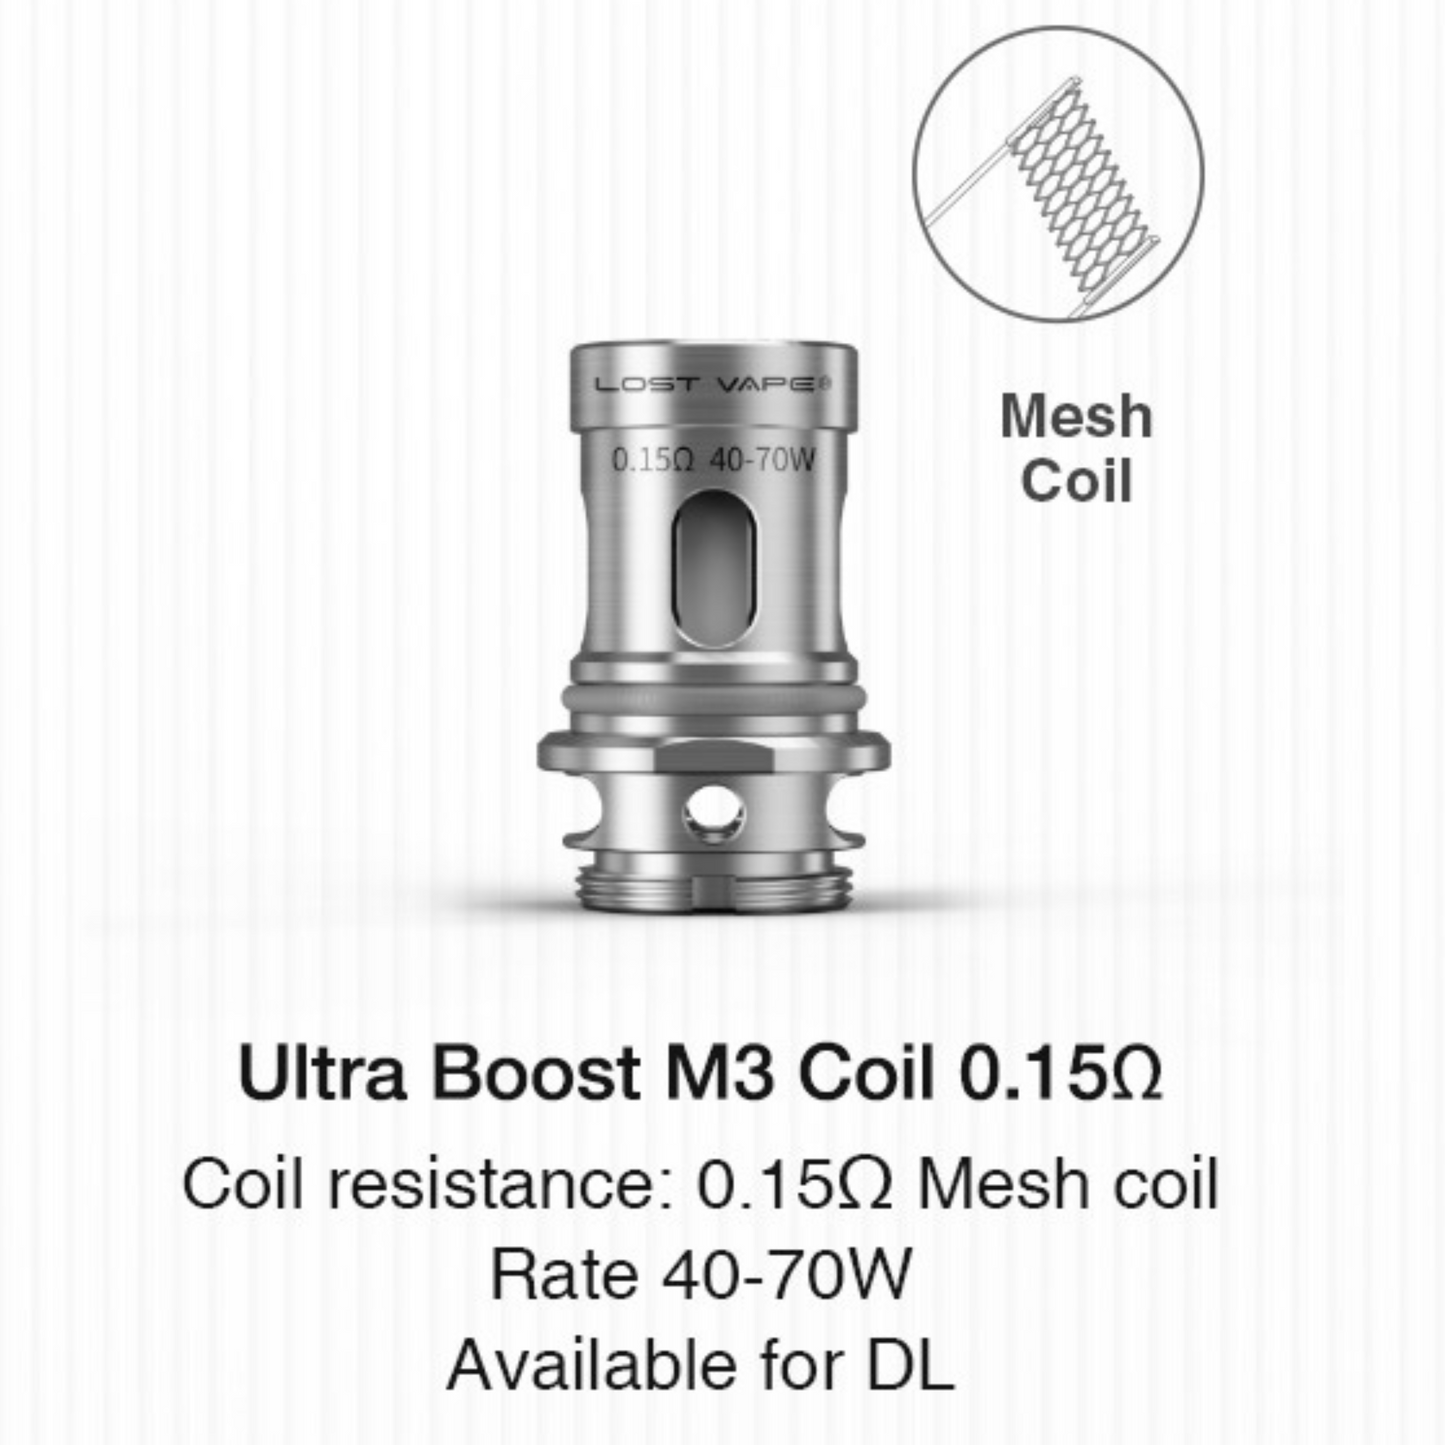 Lost Vape Ultra Boost Coils m3